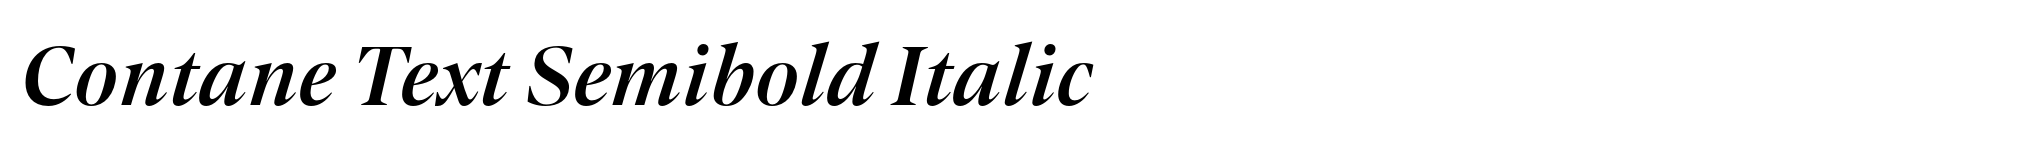 Contane Text Semibold Italic image